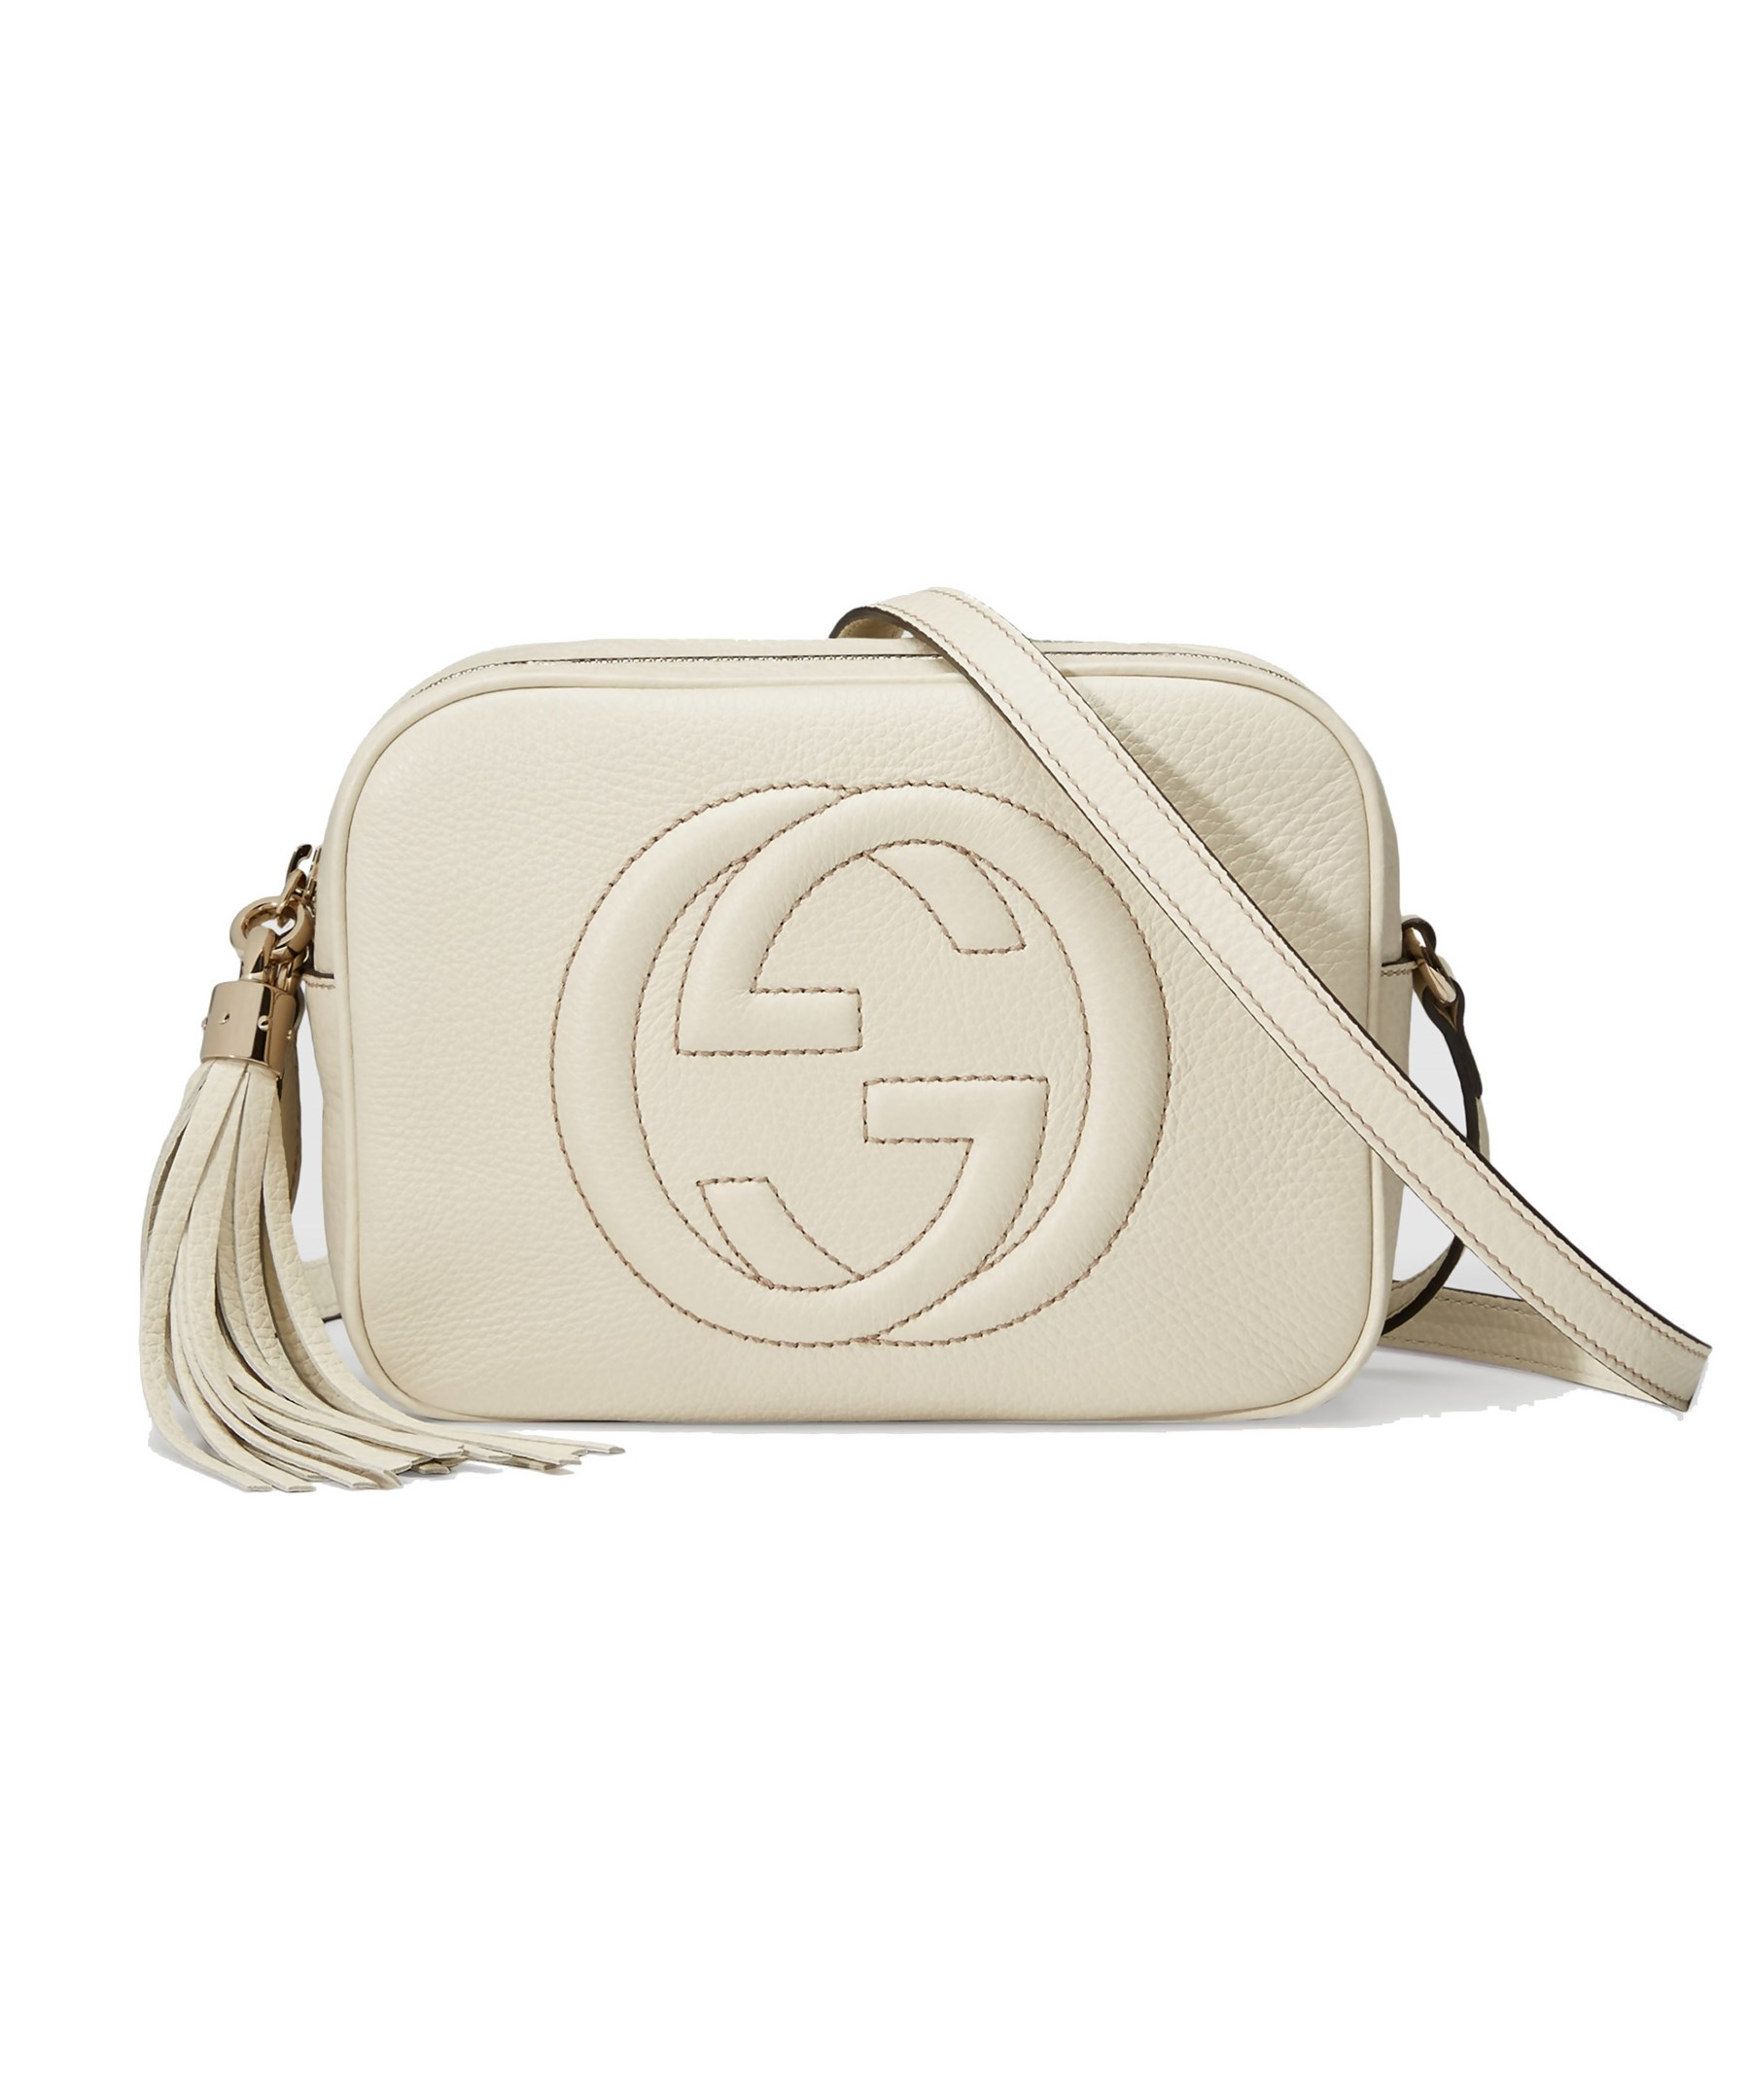 Gucci Soho Small Leather Disco Bag Sale | SEMA Data Co-op